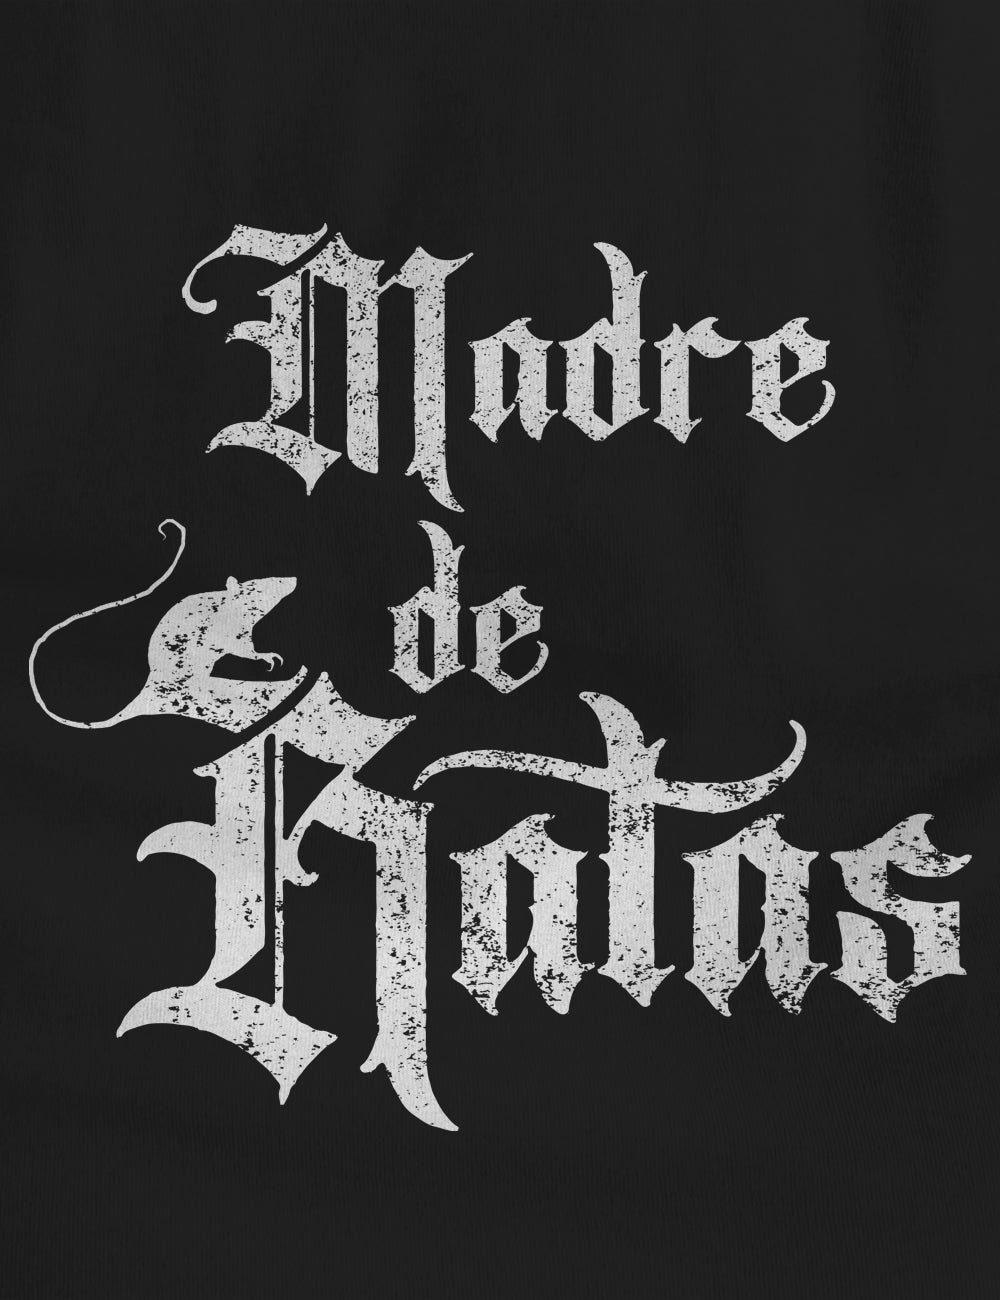 "Madre de Ratas" Crewneck Sweatshirt | Unisex